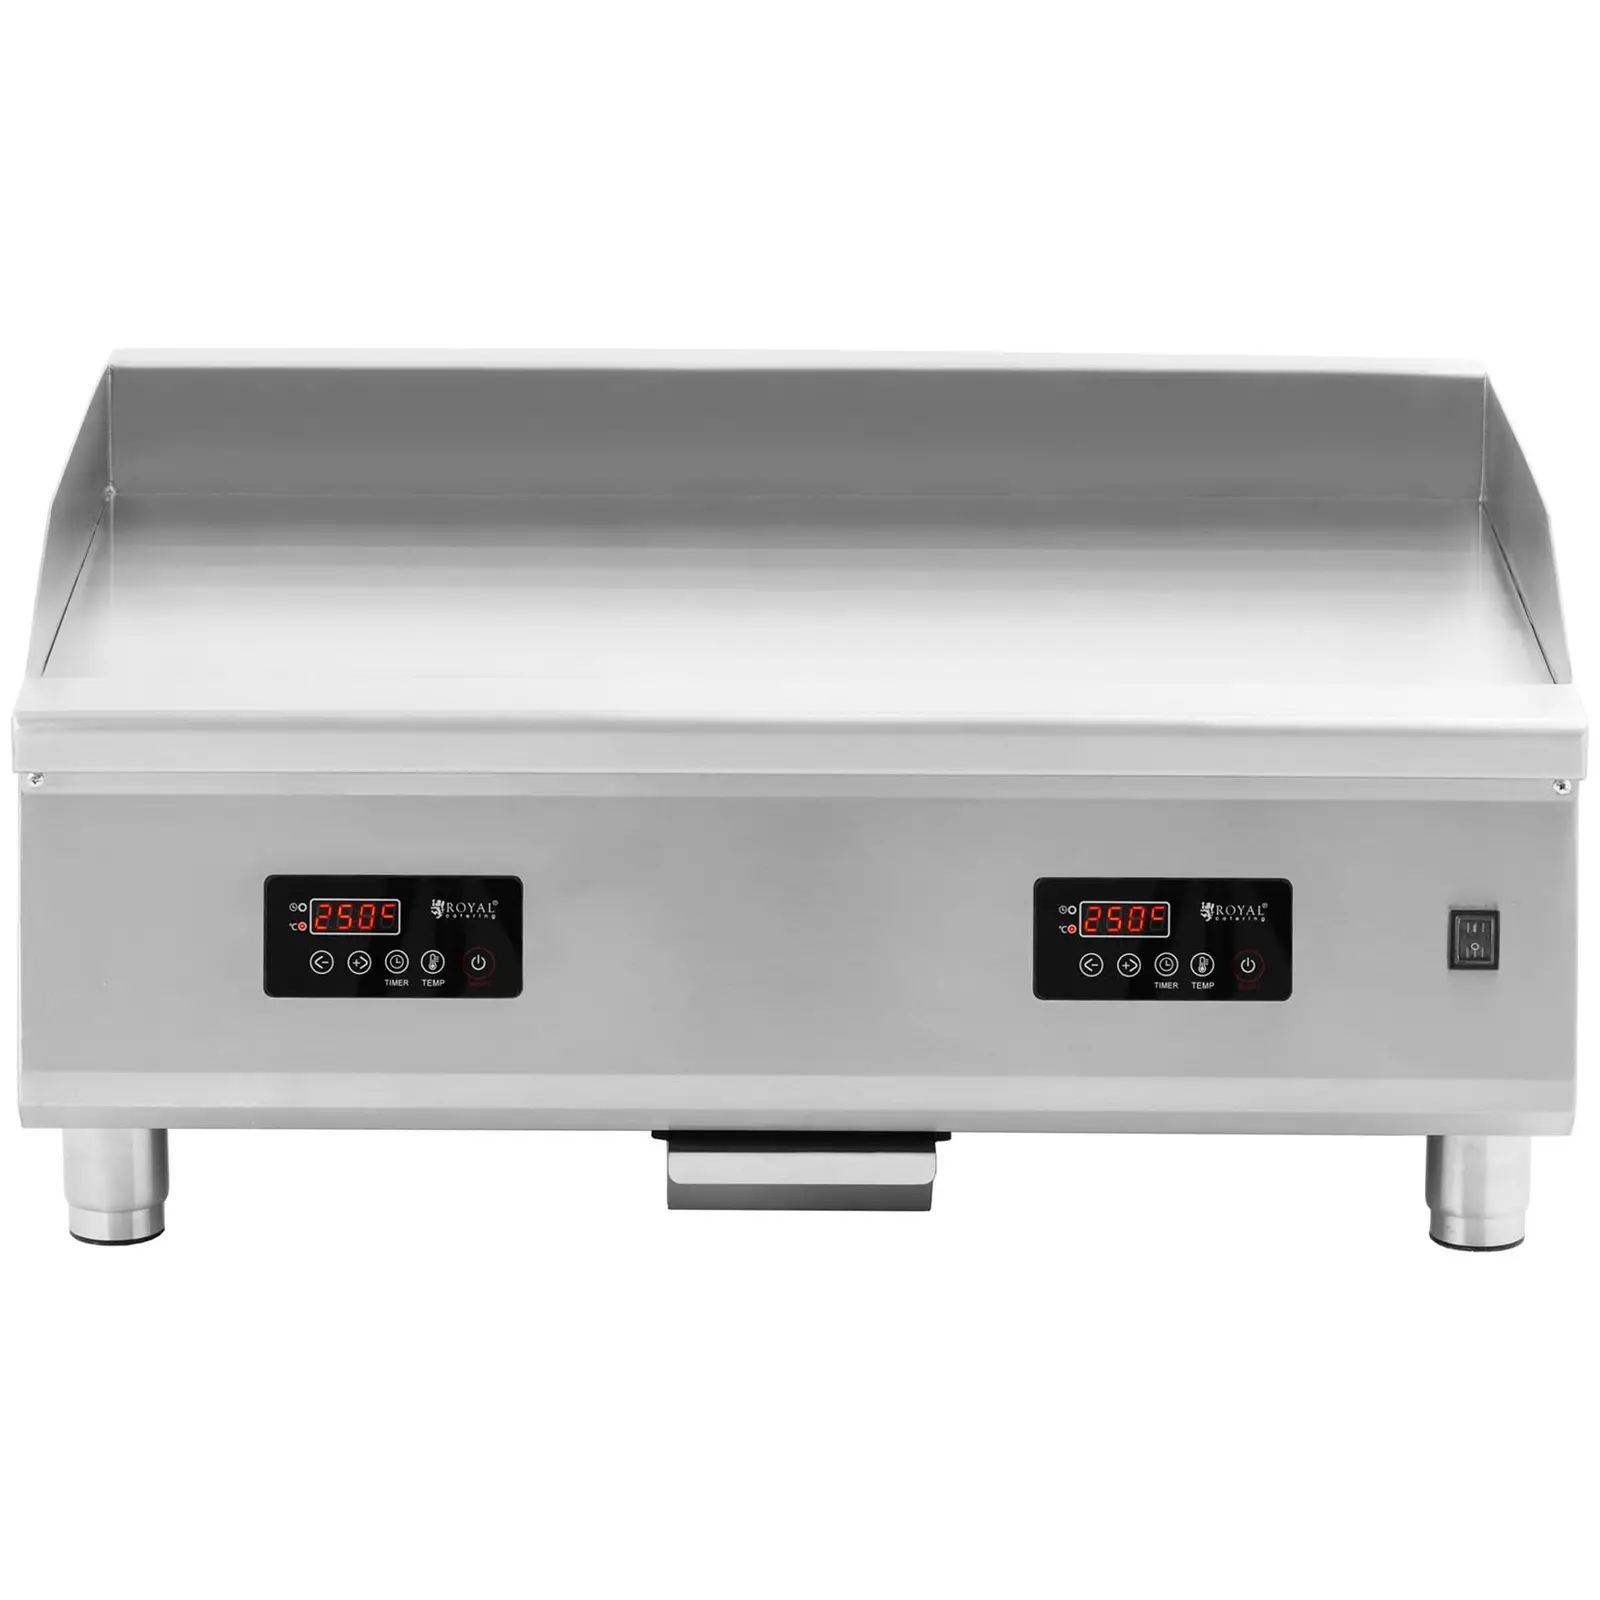 Indukciós grill lap - 910 x 520 mm - sima - 2 x 6000 W - Royal Catering